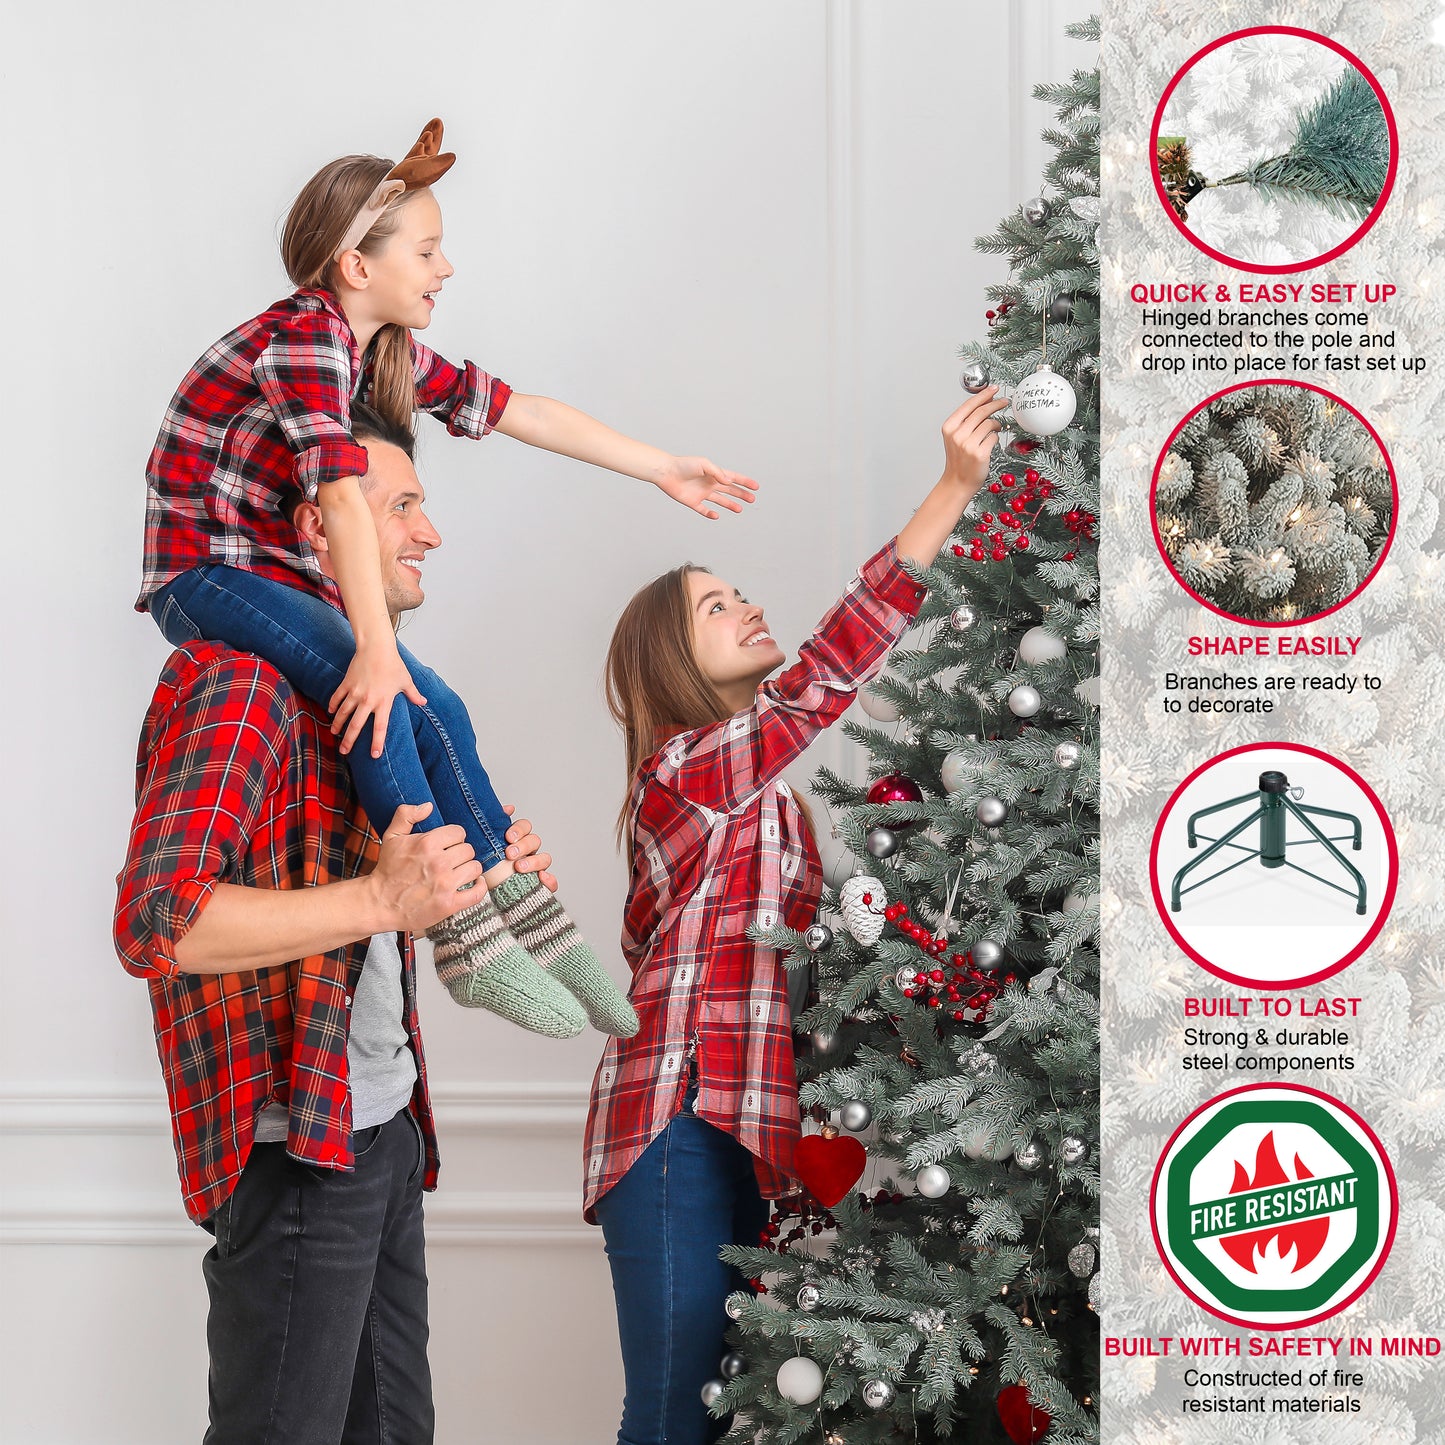 Pre-Lit 7.5' Slim Flocked Royal Majestic Spruce Artificial Christmas Tree, Green